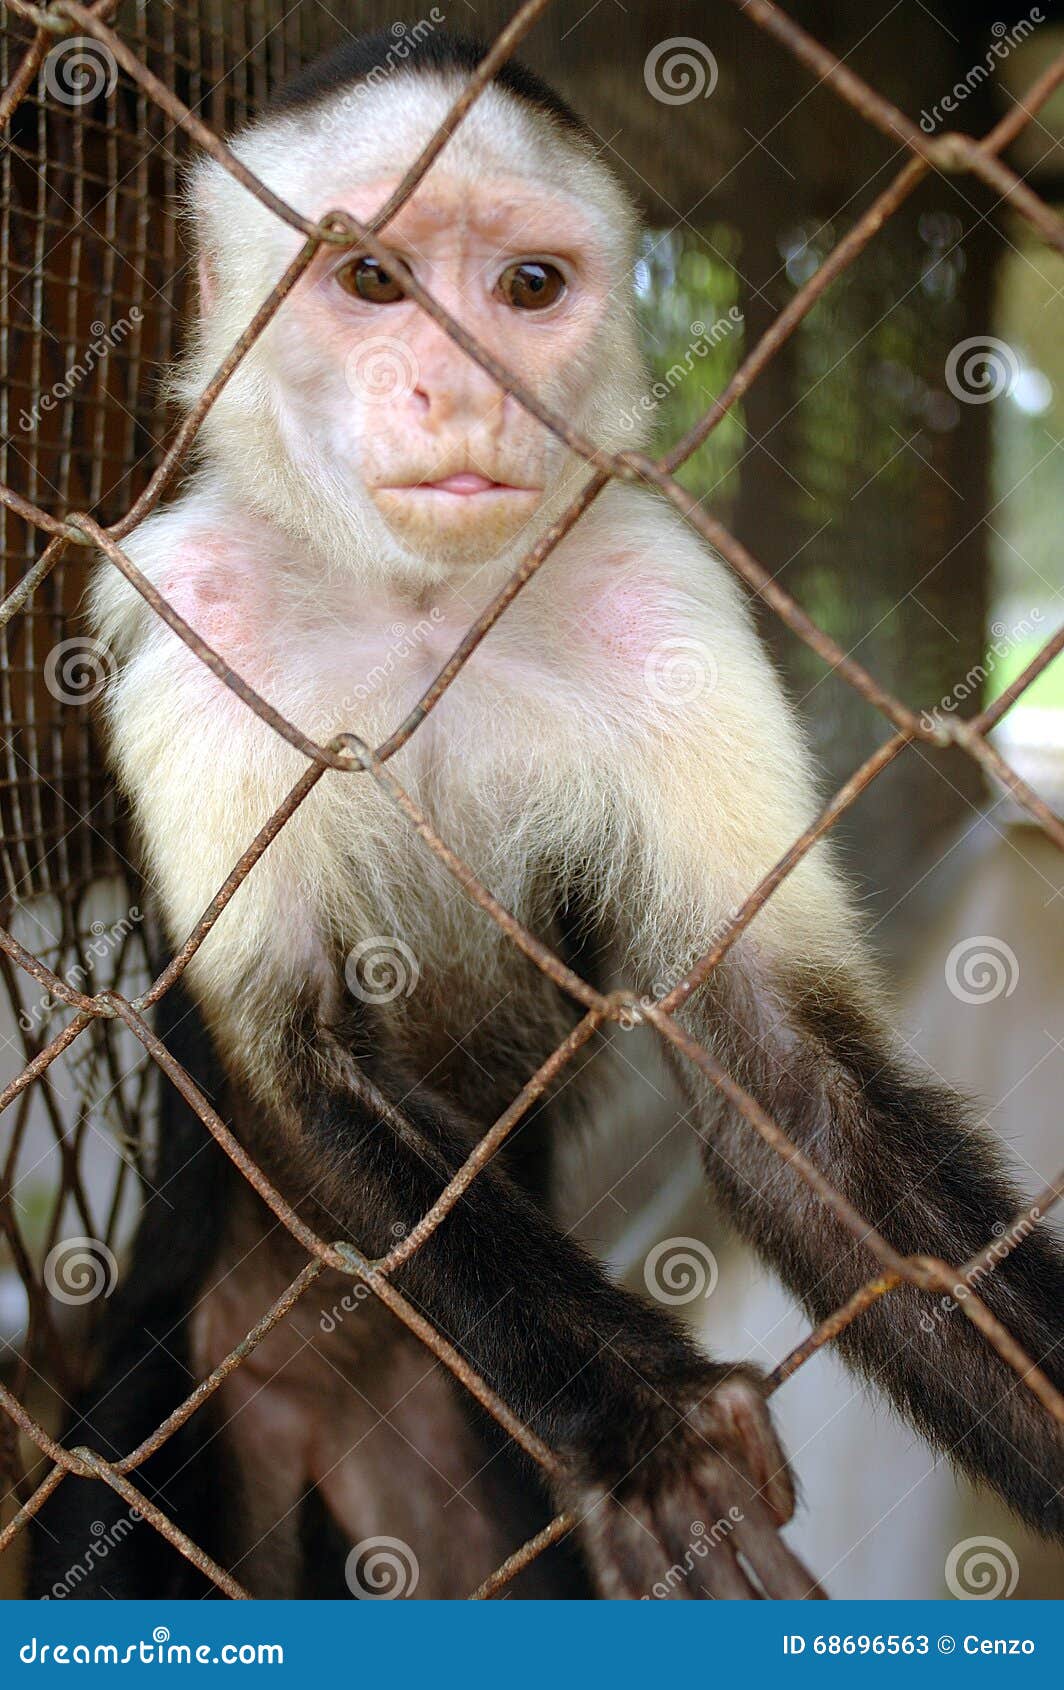 monkey in a cage, colon panama